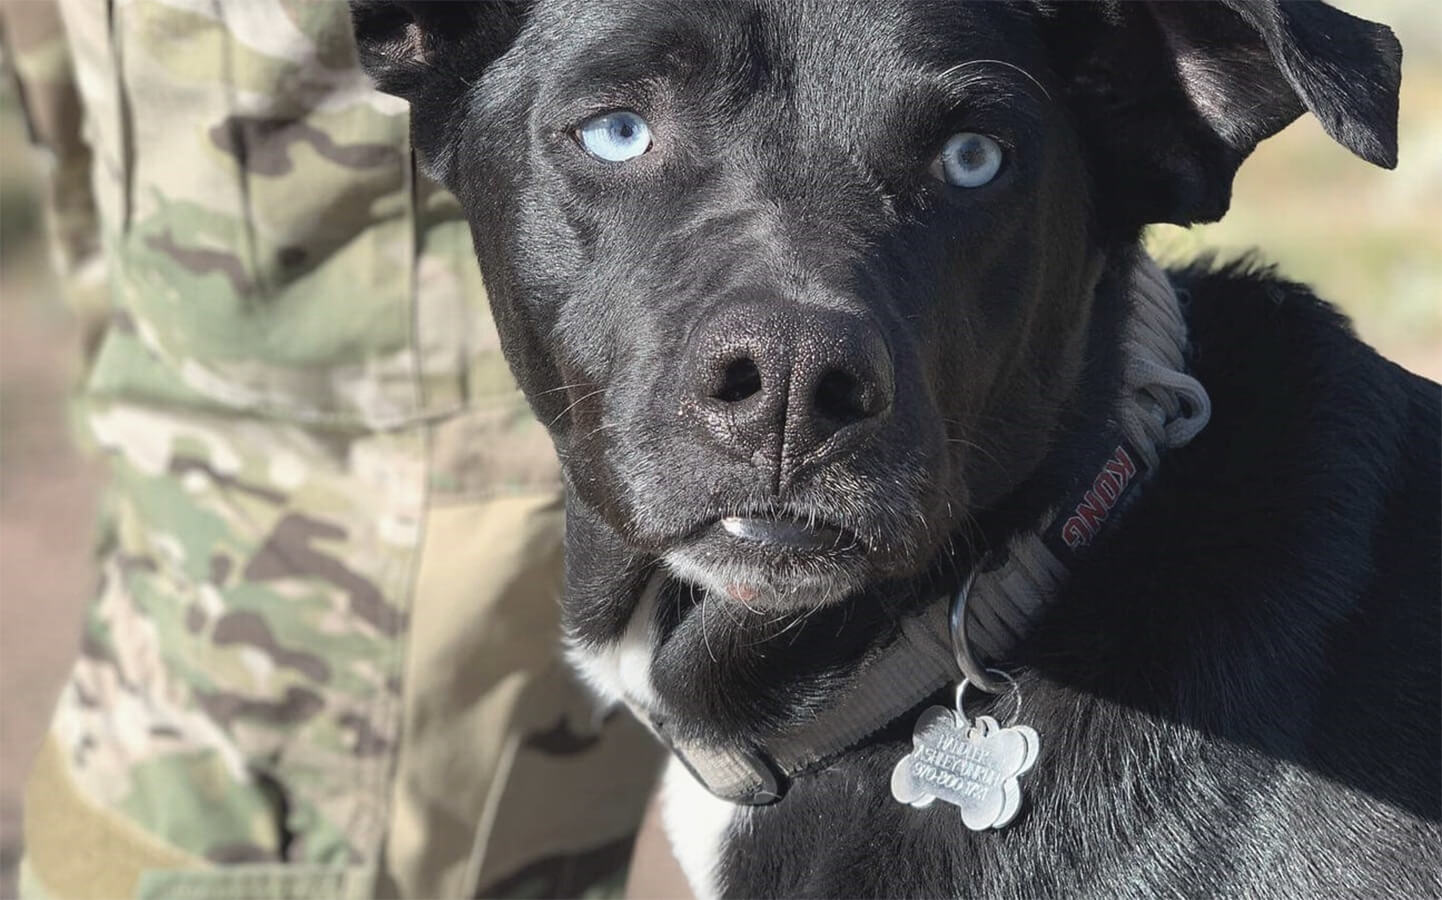 Dog Tag Buddies Helping Veterans